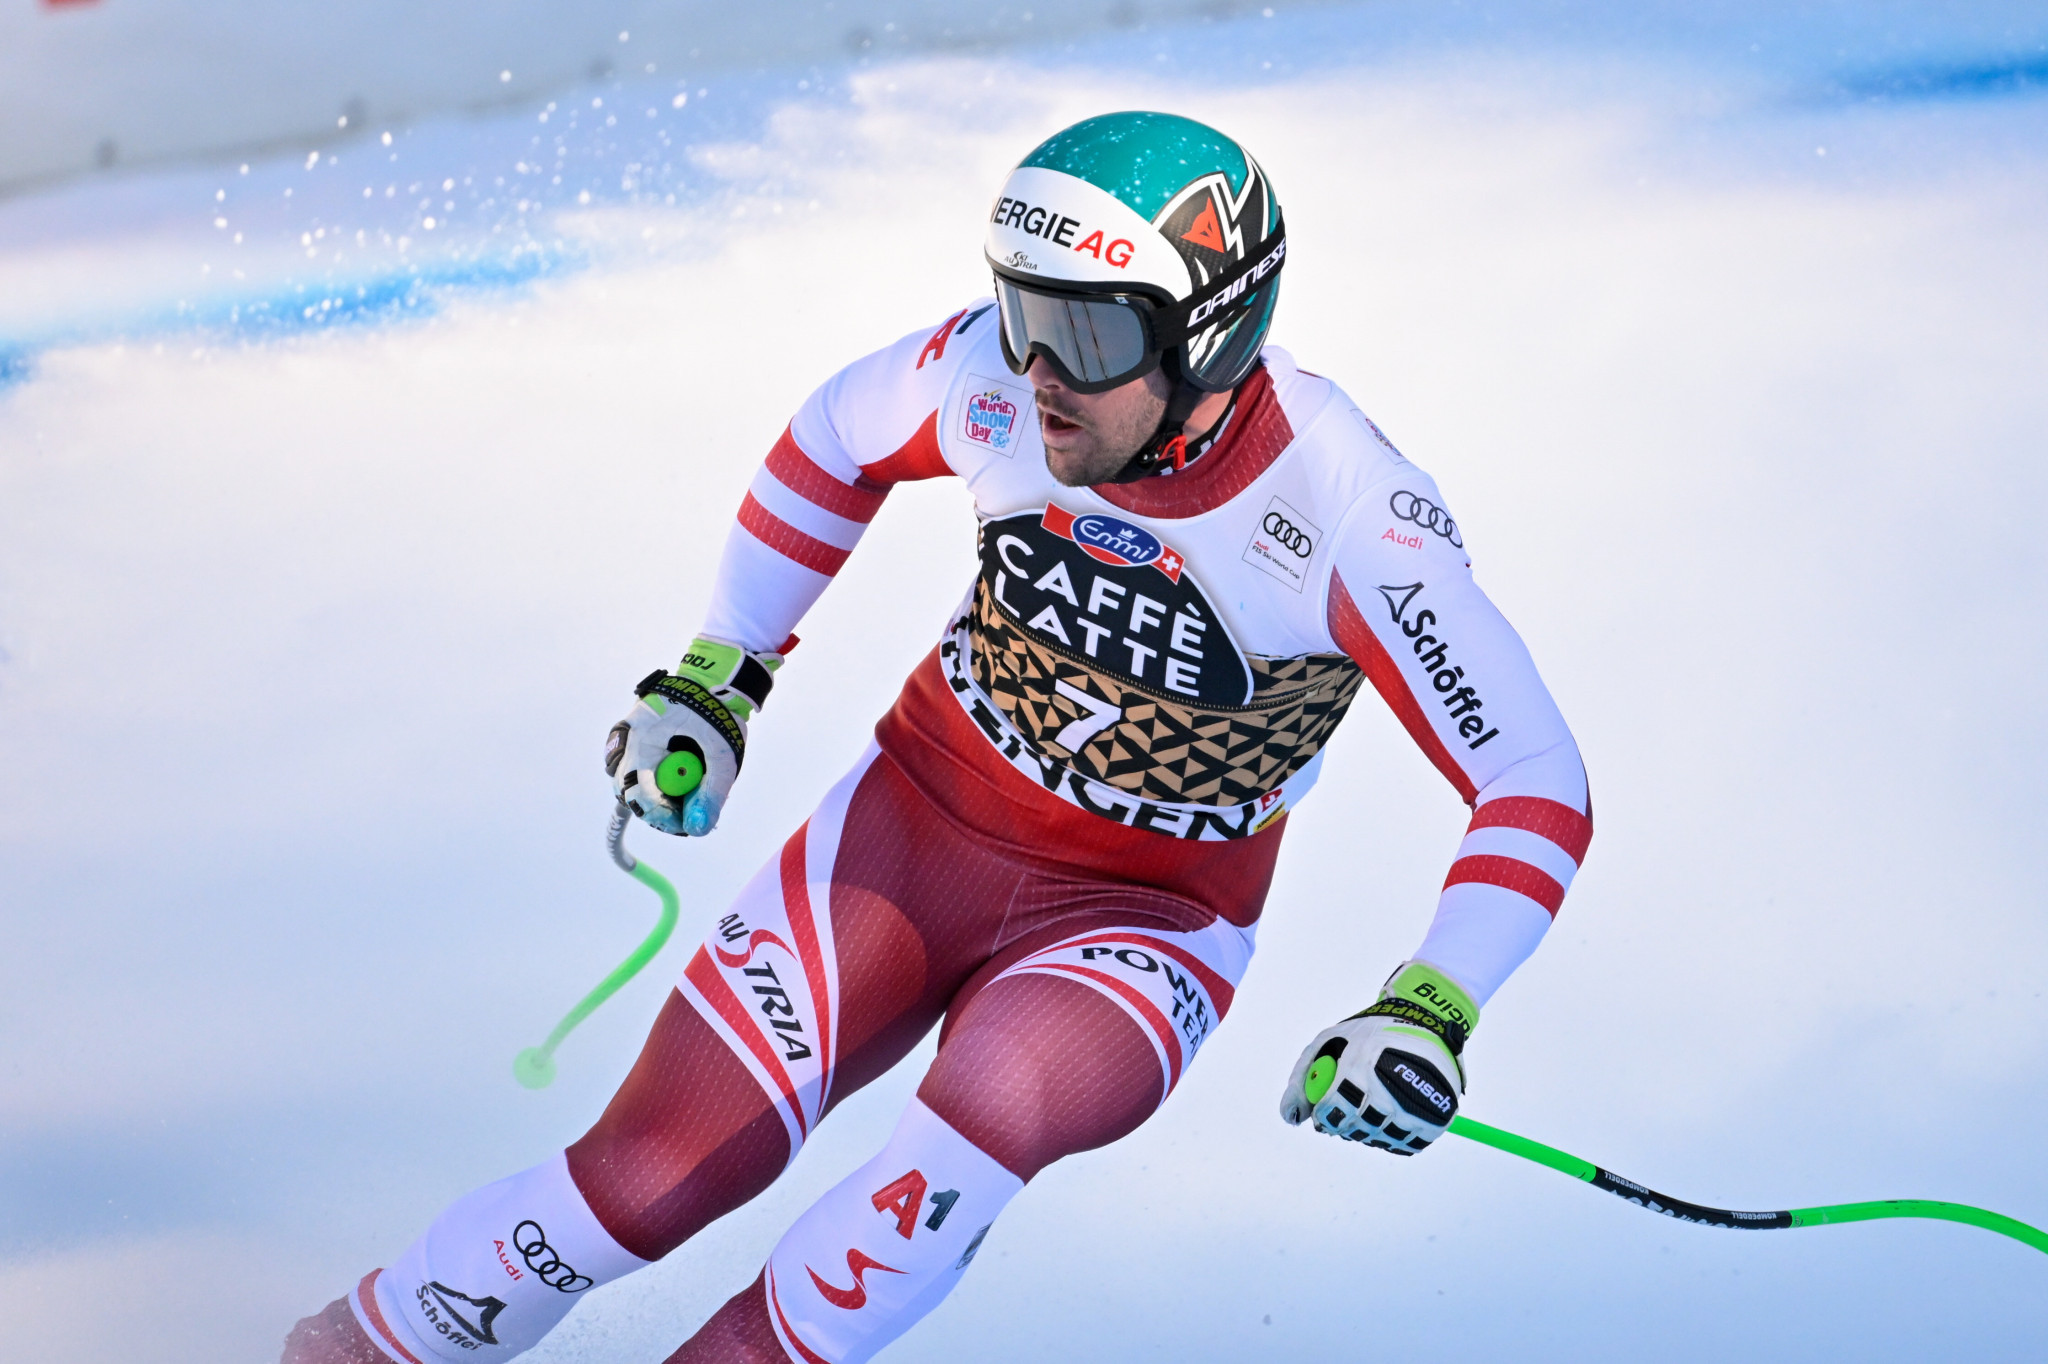 World champion Kriechmayr earns first Alpine Ski World Cup win of the season in Wengen